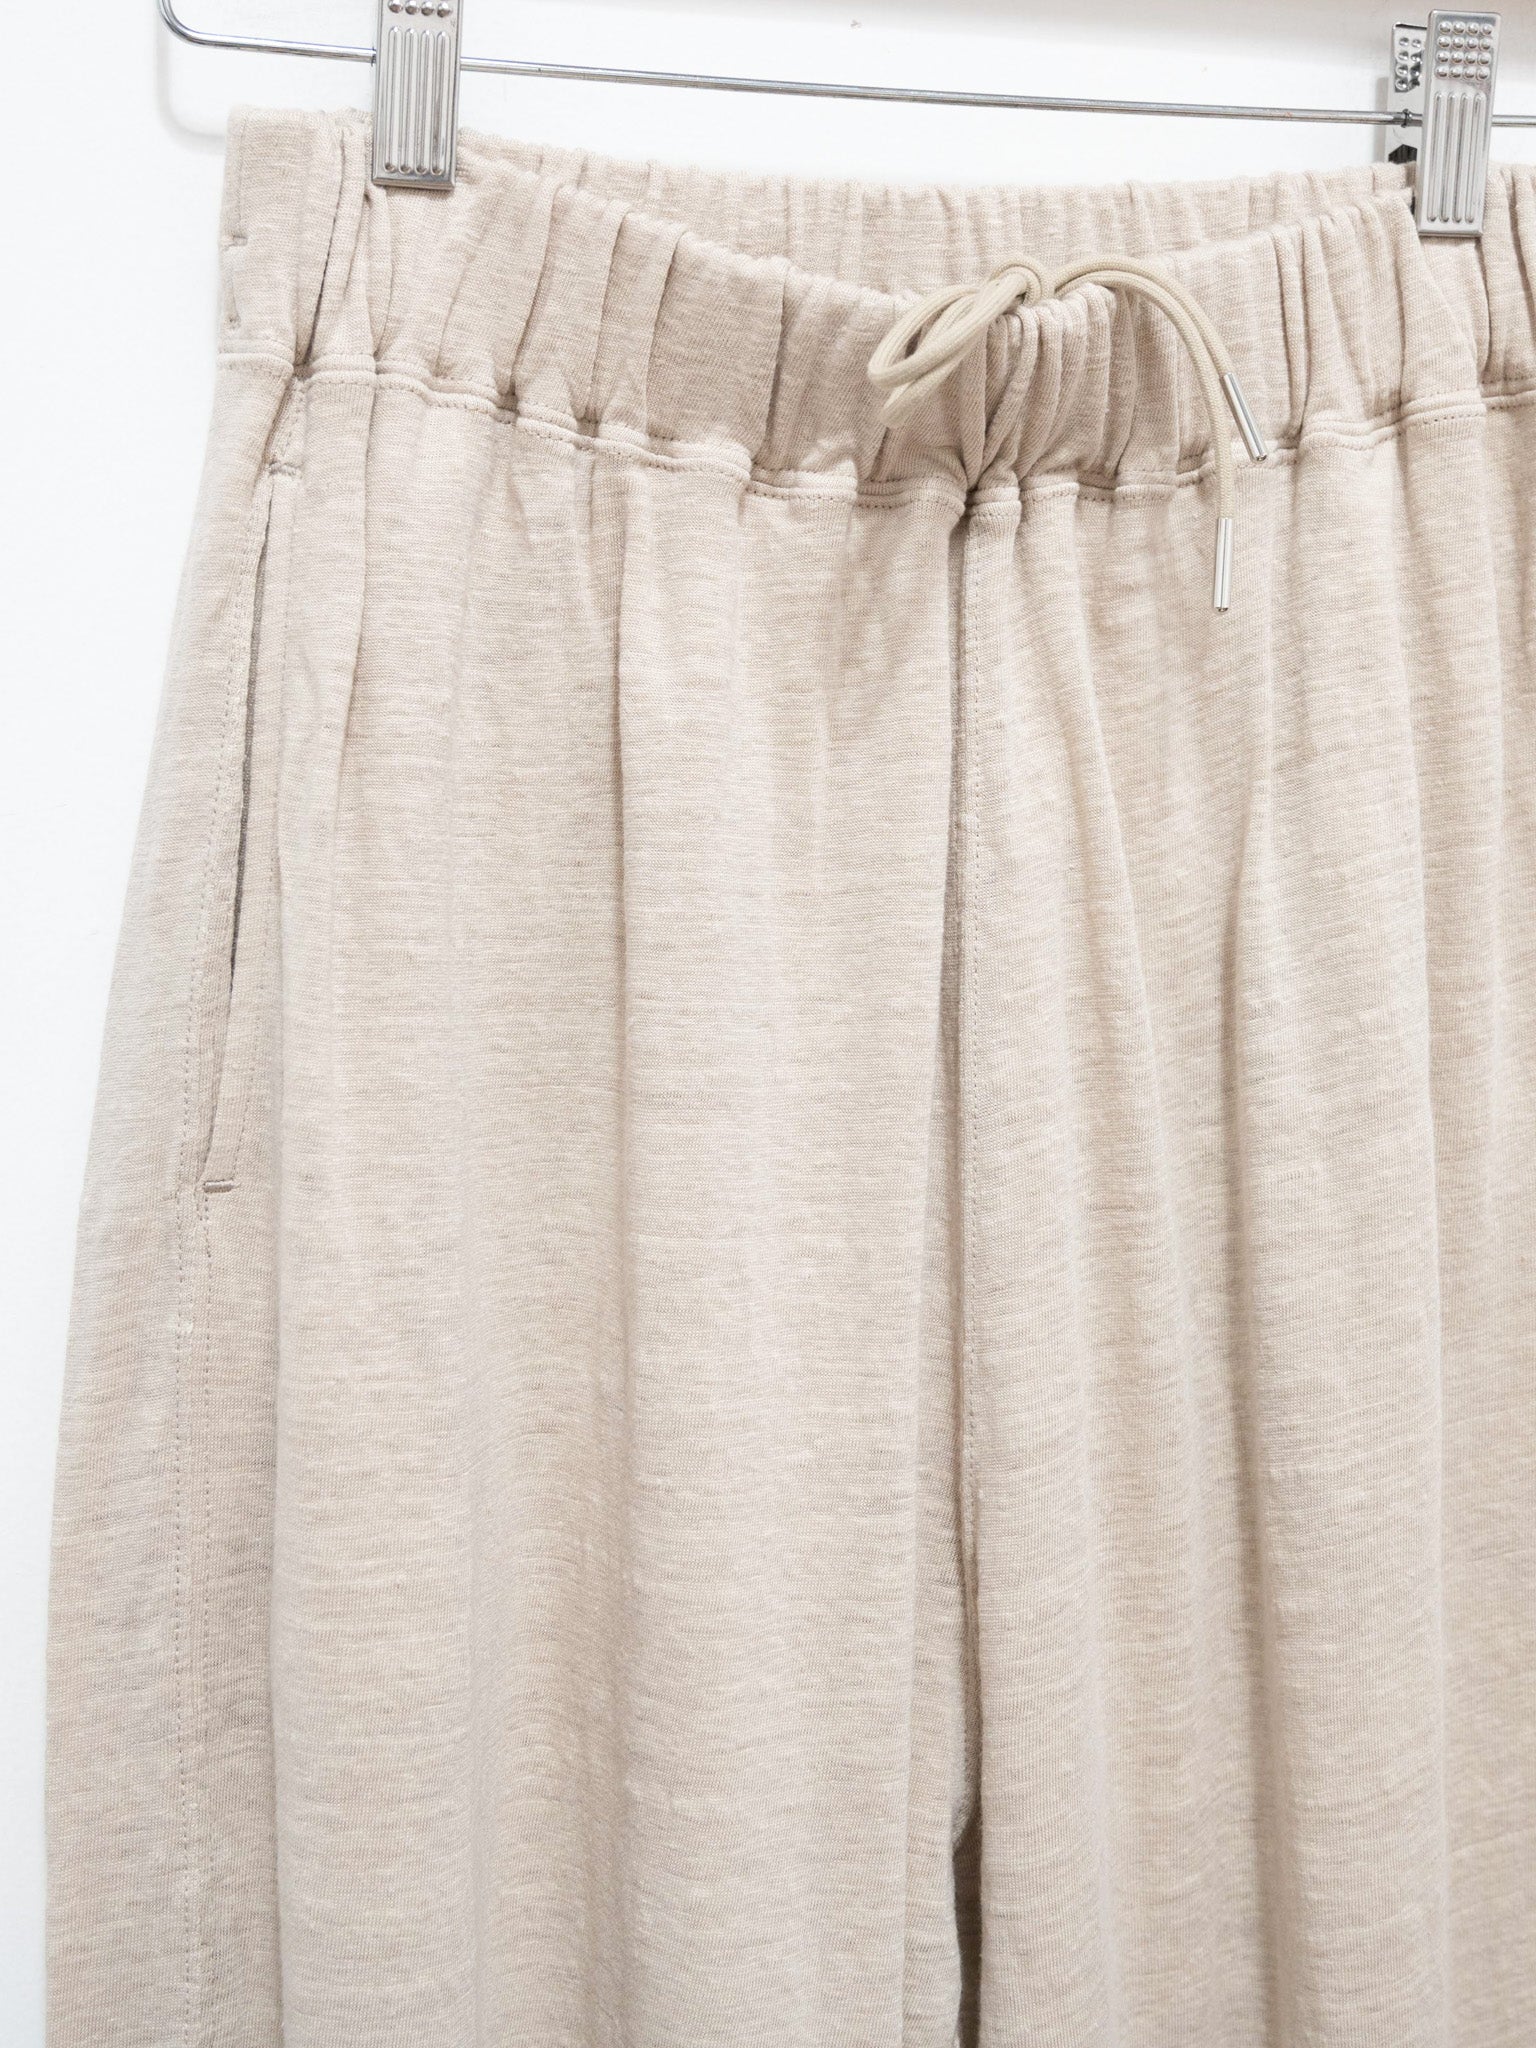 Namu Shop - Unfil French Linen Jersey Wide Leg Pants - Flax Beige